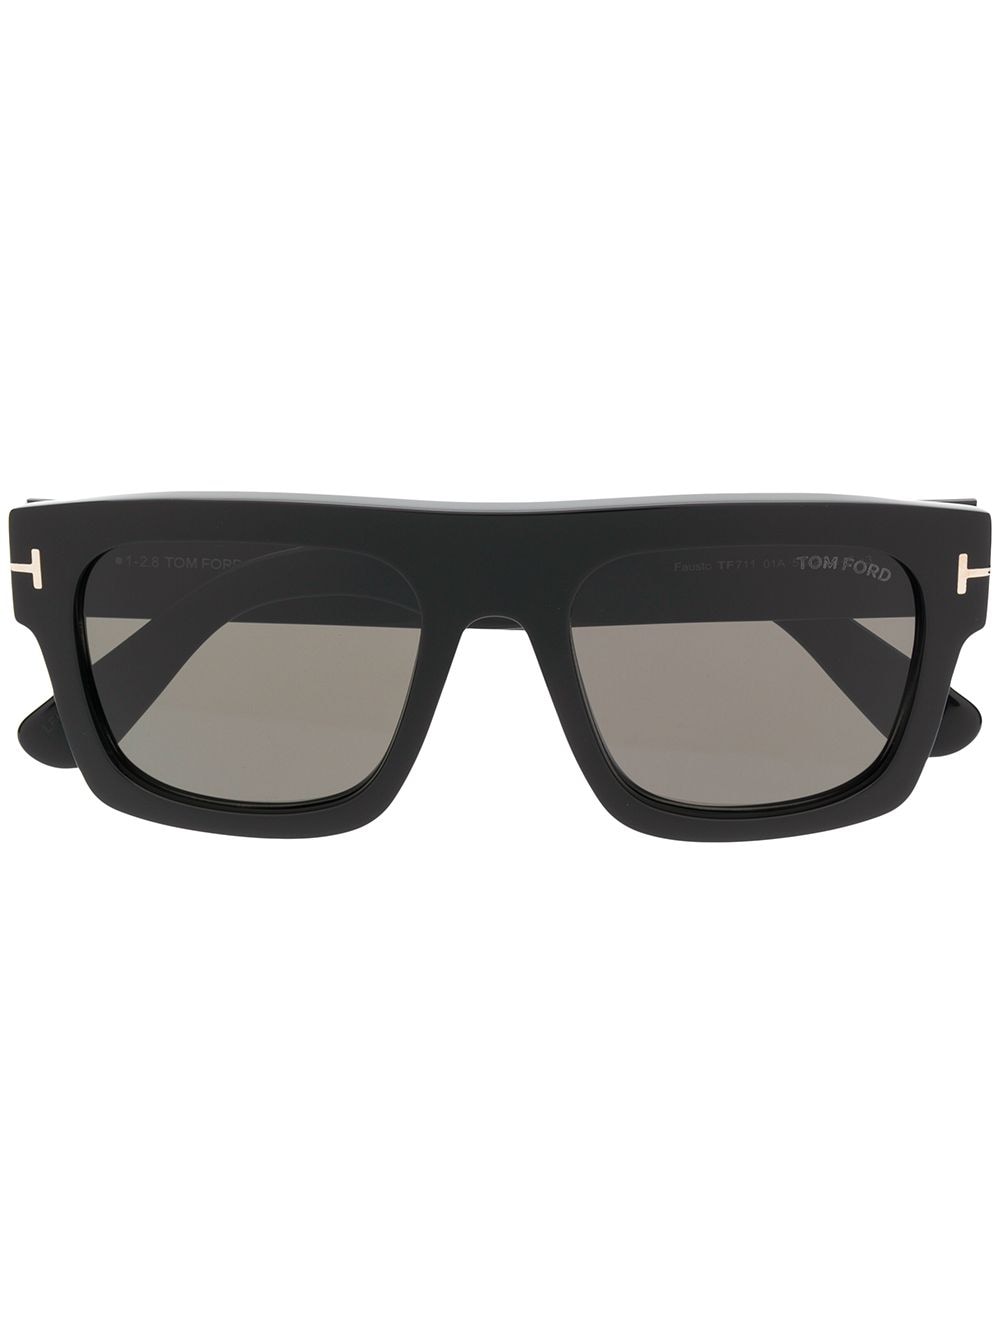 TOM FORD Eyewear Fausto sunglasses - Black von TOM FORD Eyewear